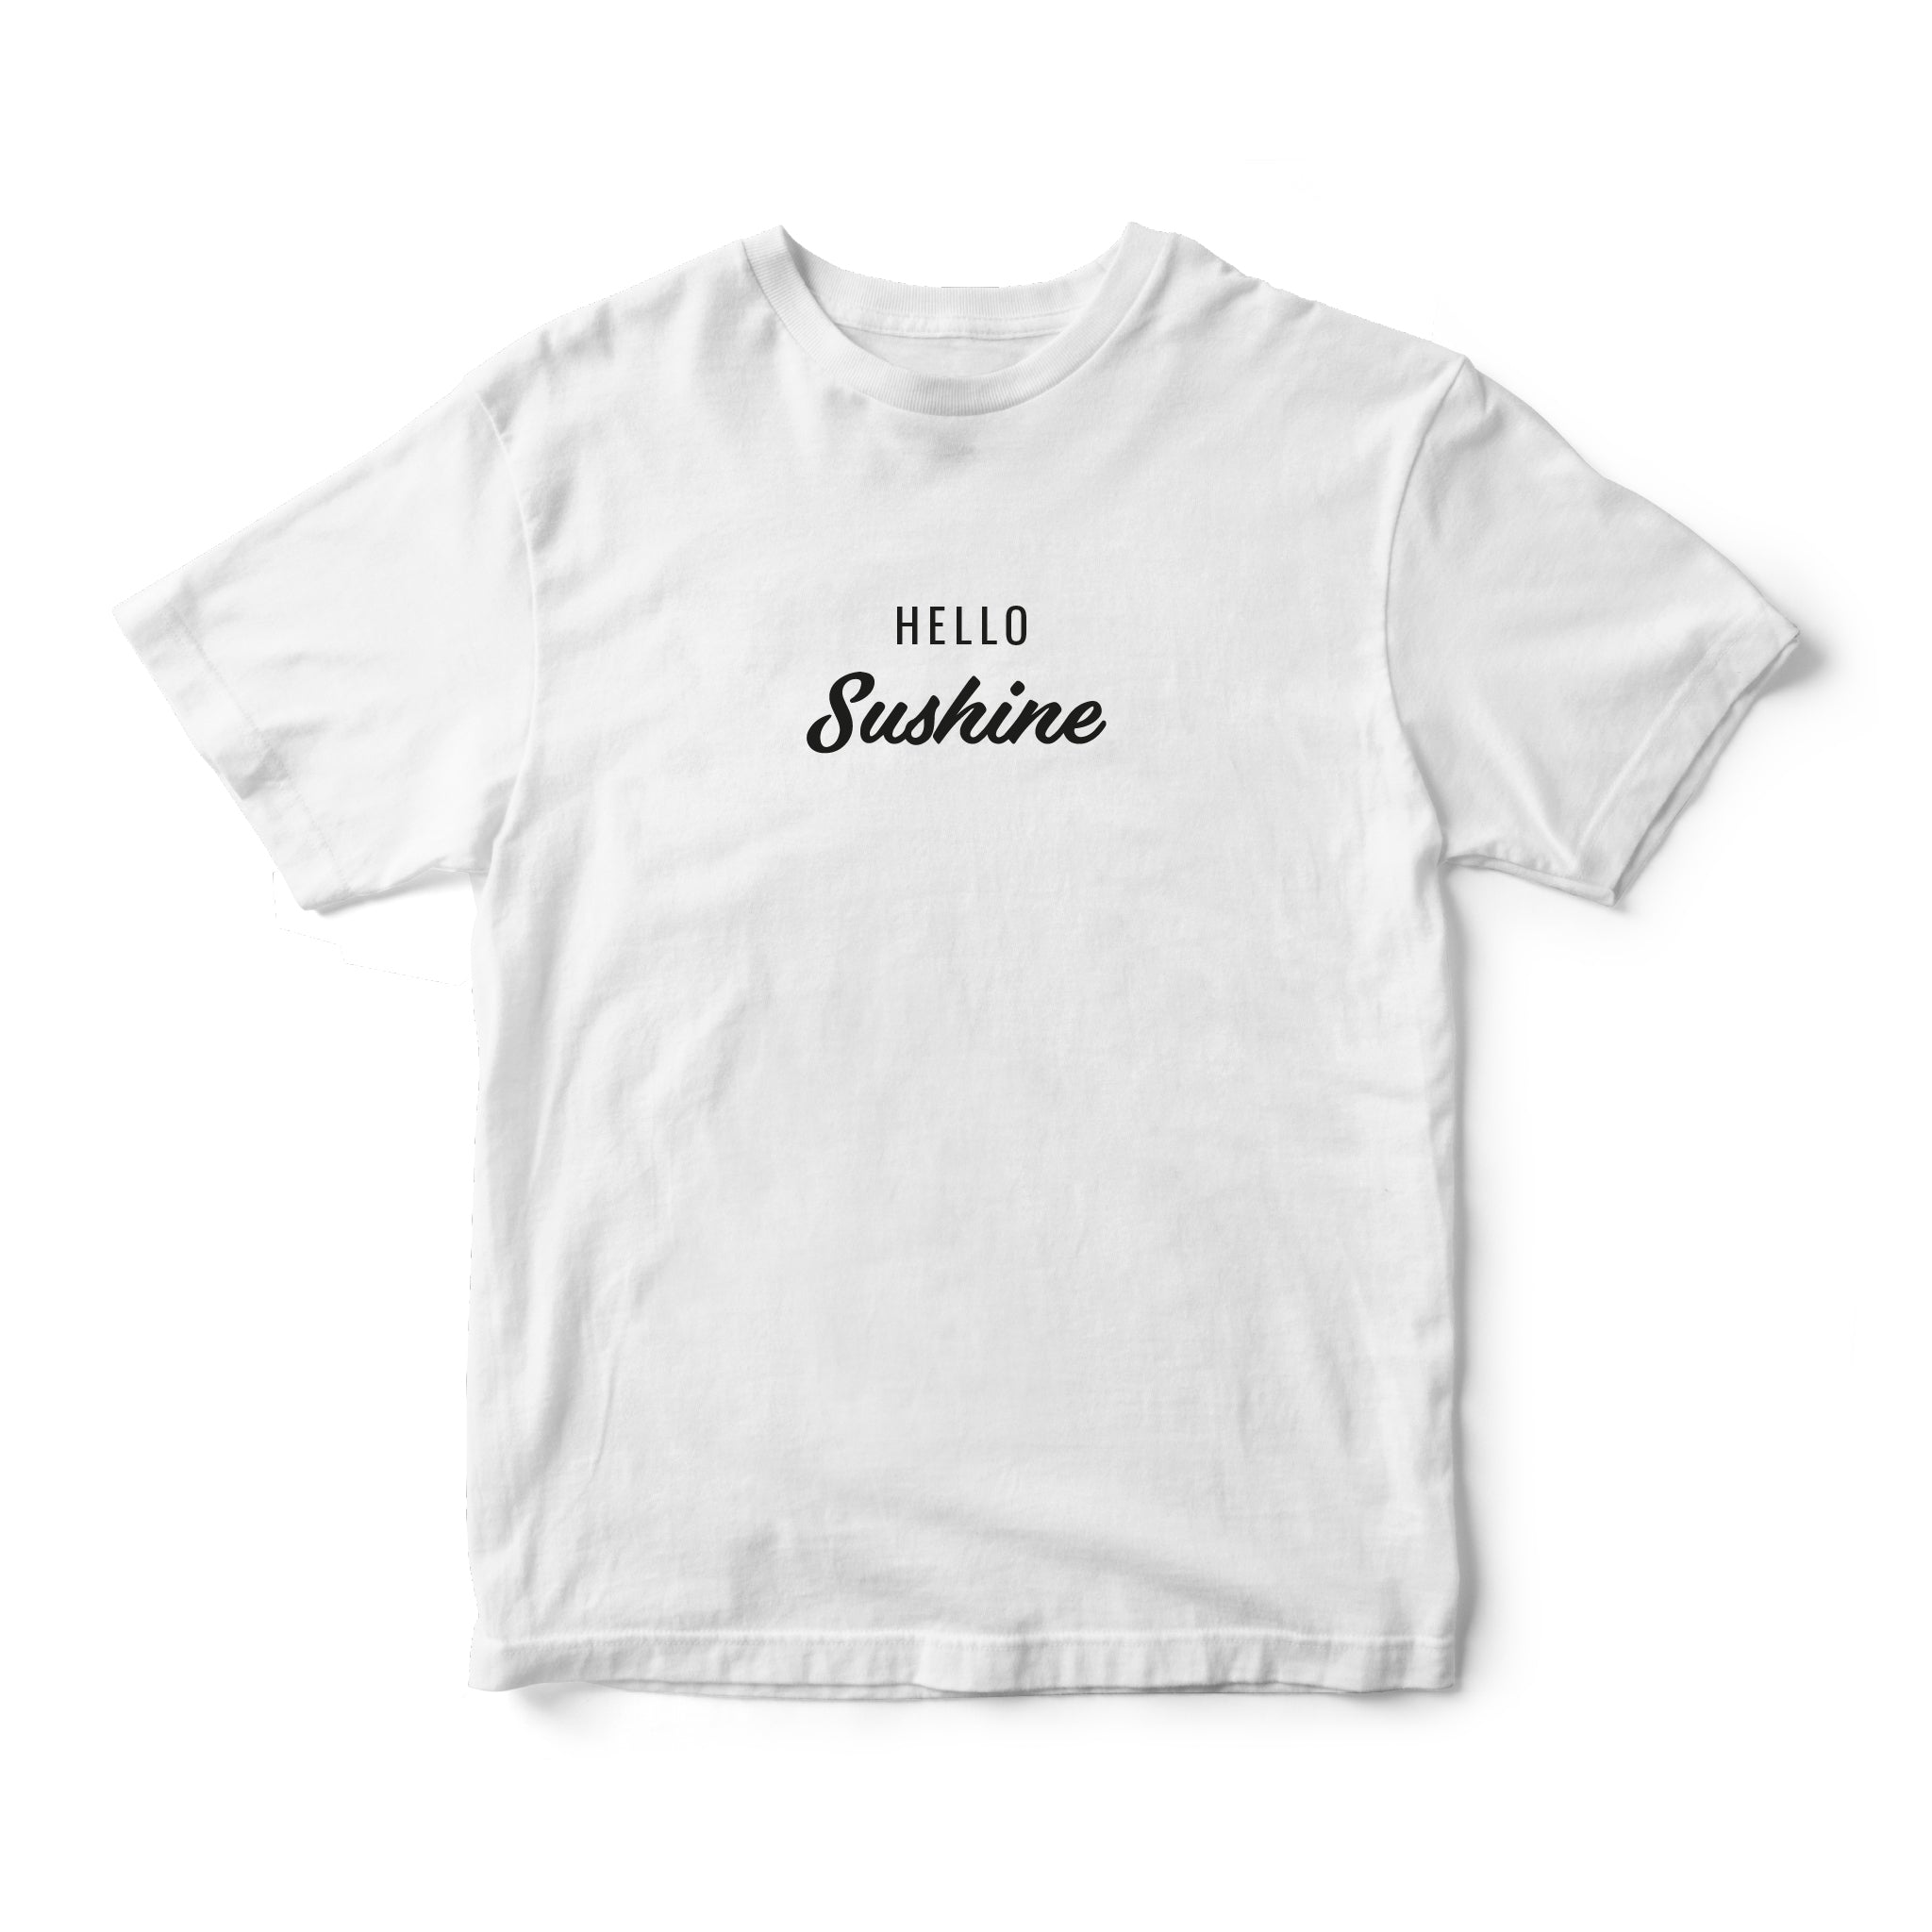 Instee Hello Sunshine T-shirt Unisex 100% Cotton